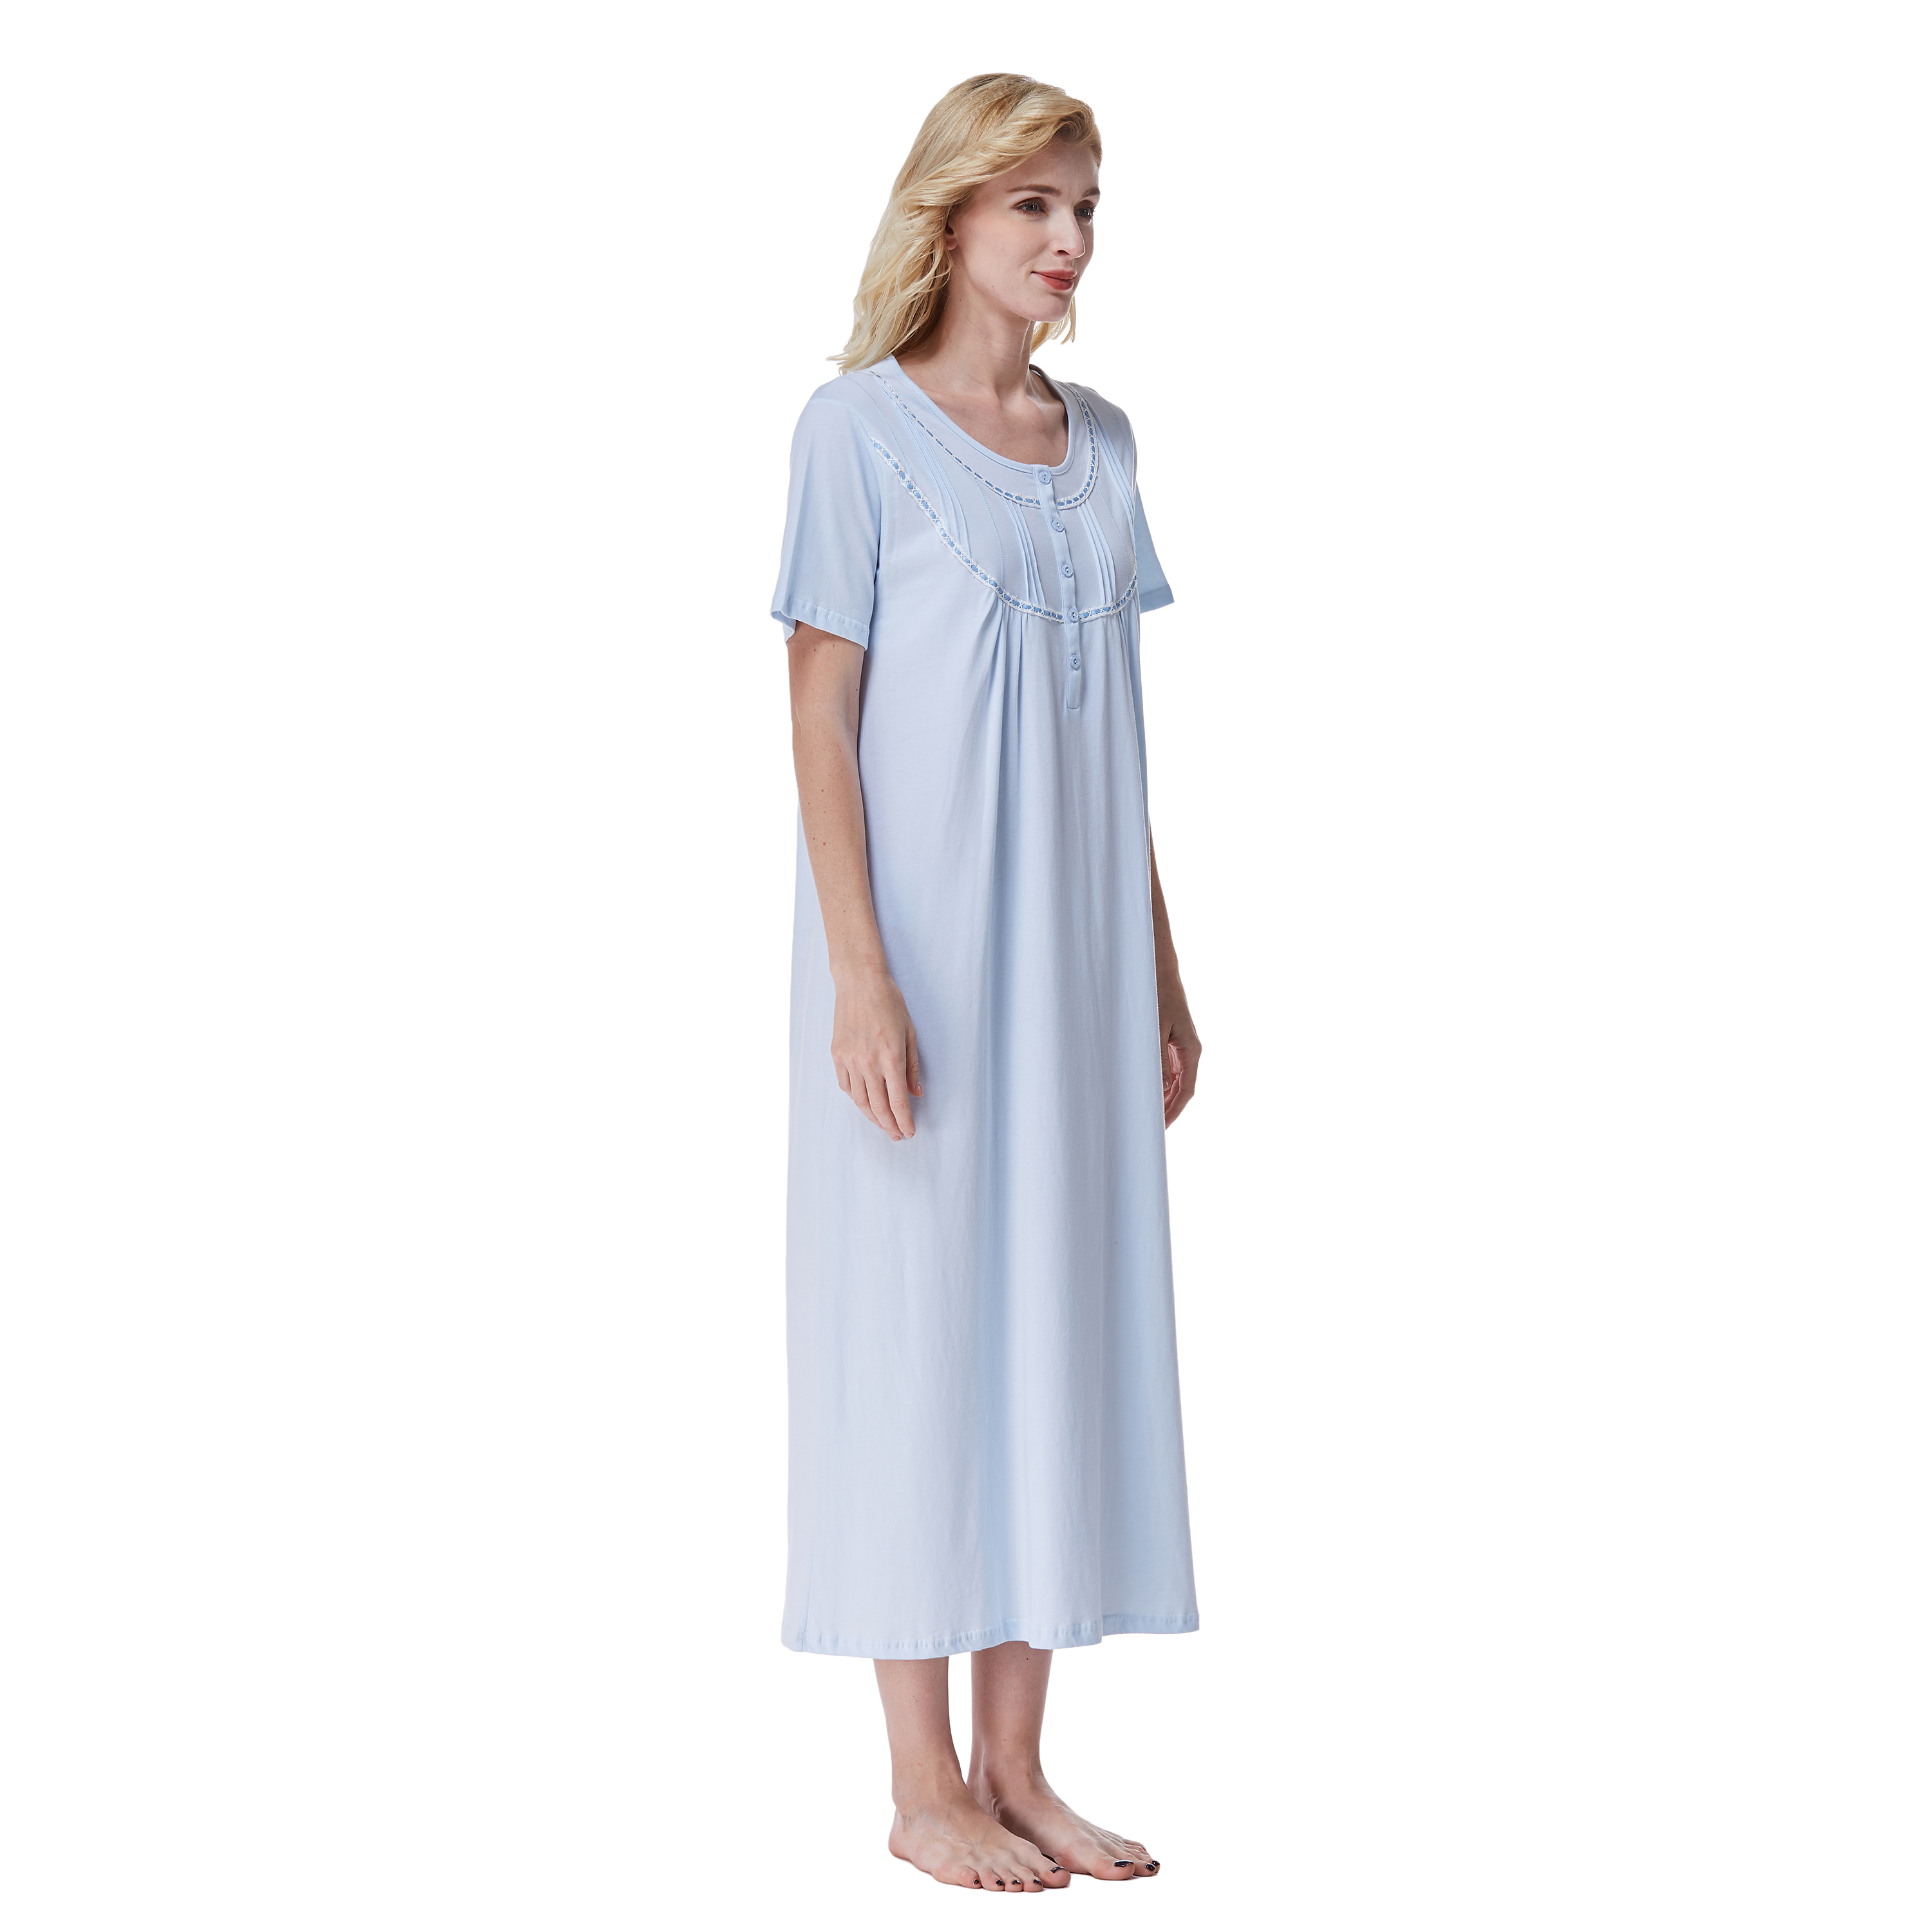 Keyocean Women's Nightgowns 100% Cotton Lace Trim Short Sleeve